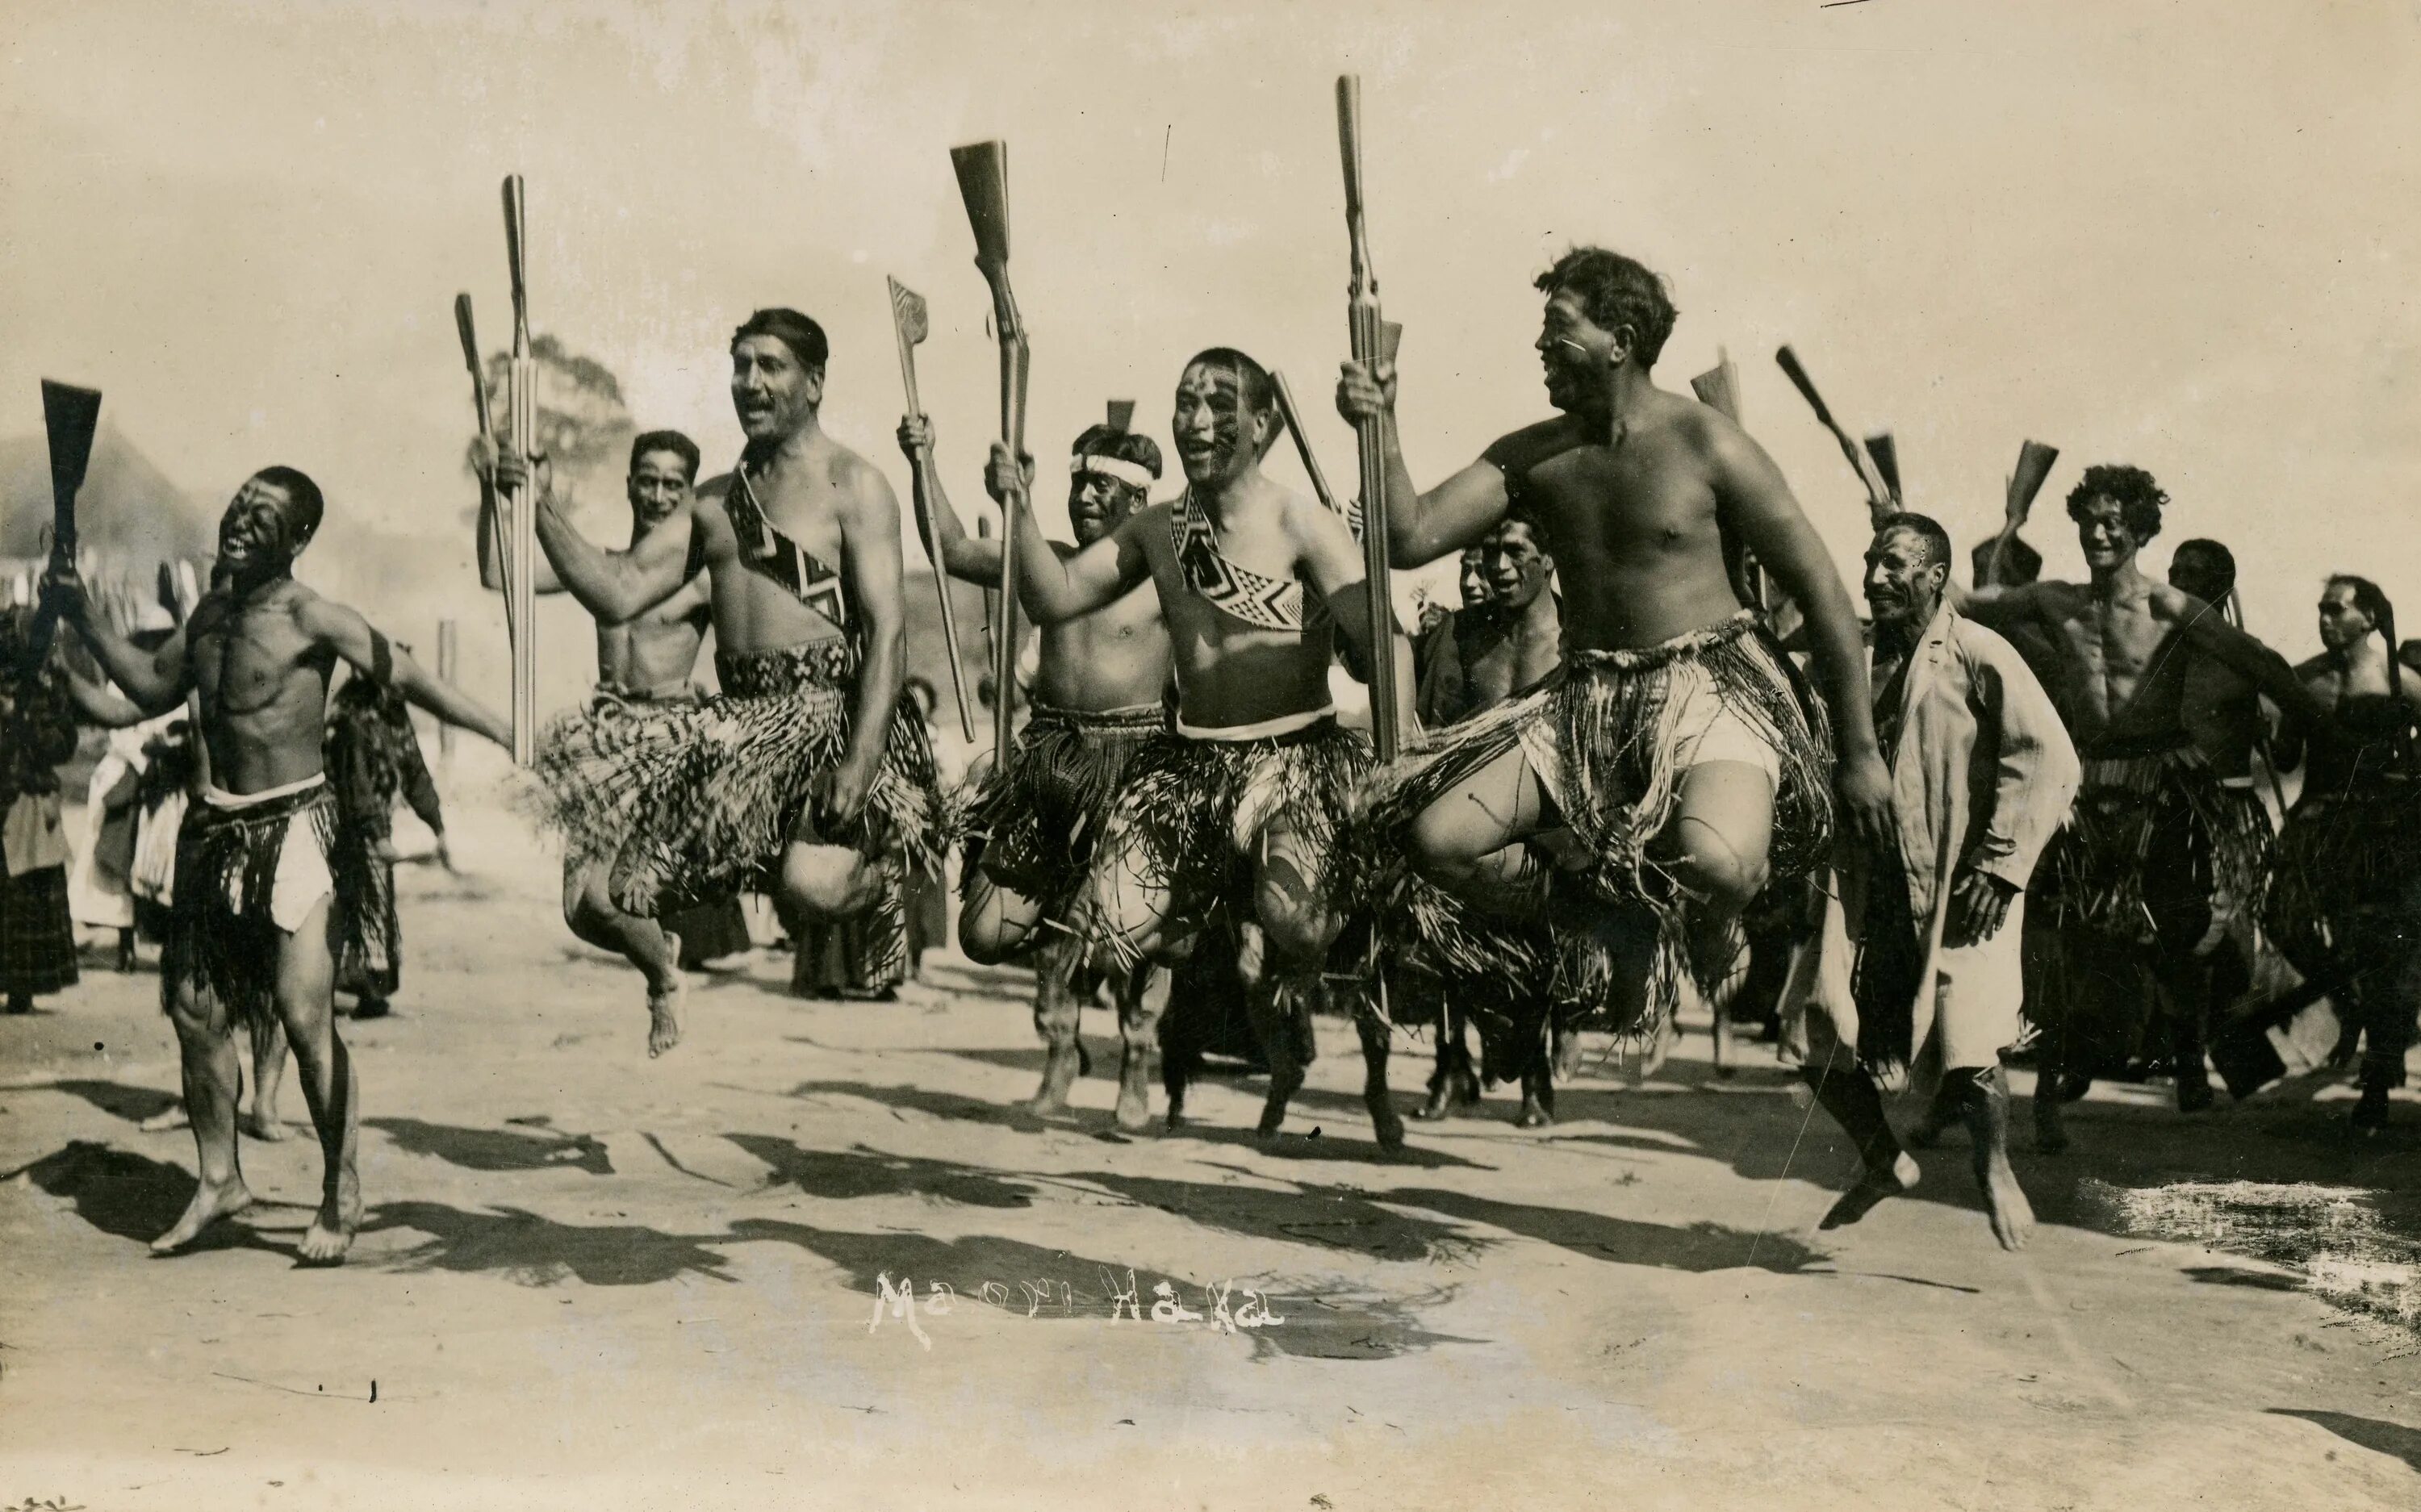 New zealand maori. Маори племя 19 век. Маори и мориори. Мориори племя. Новозеландия Маори.